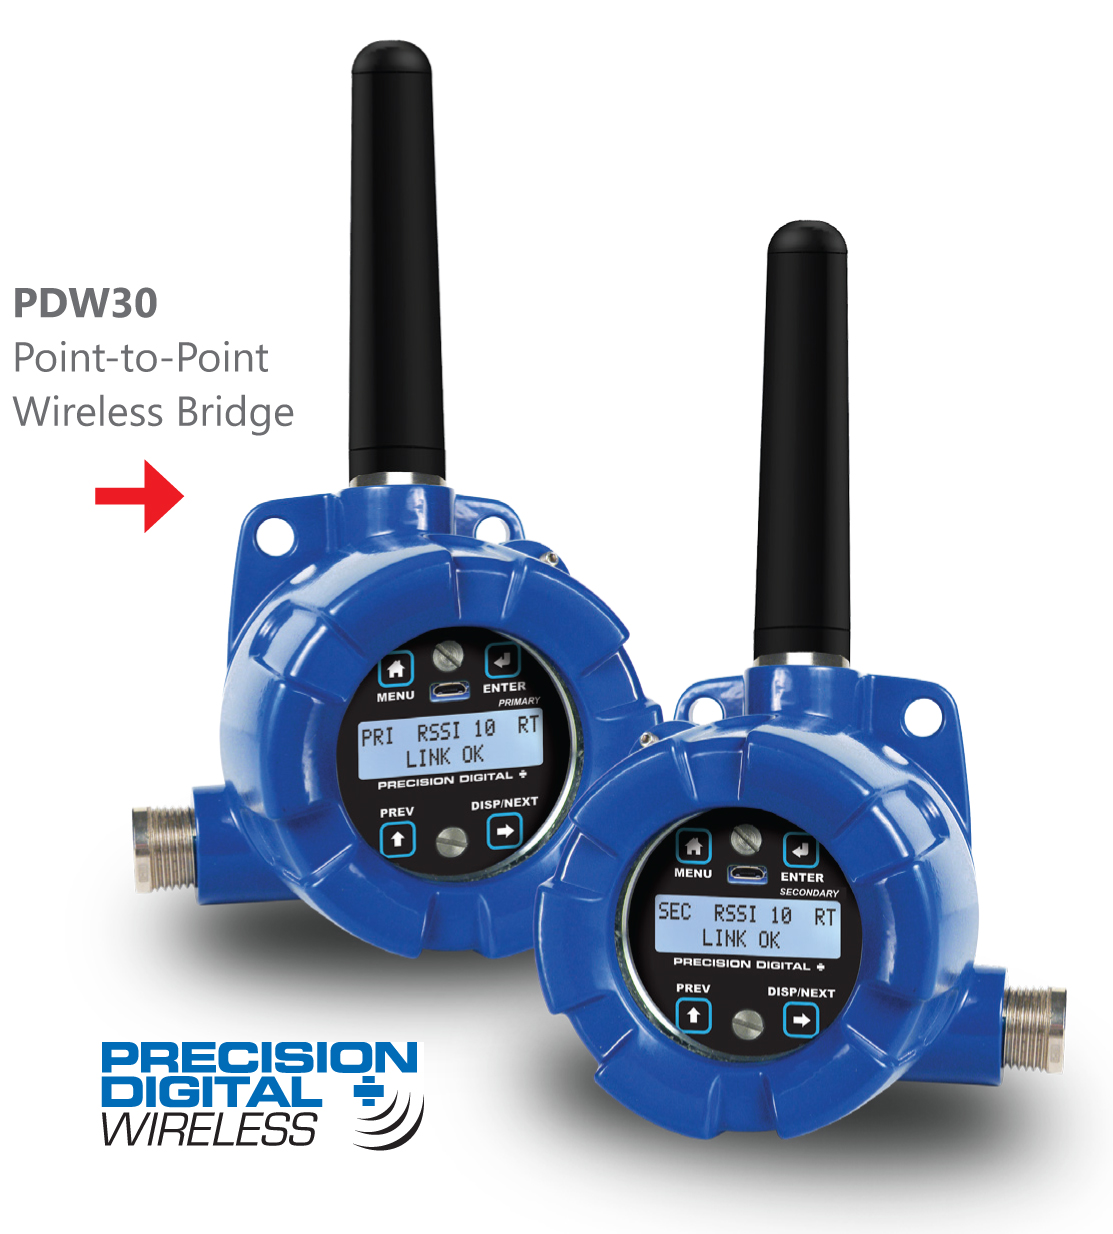 PDW30 Point-to-Point Wireless Bridge